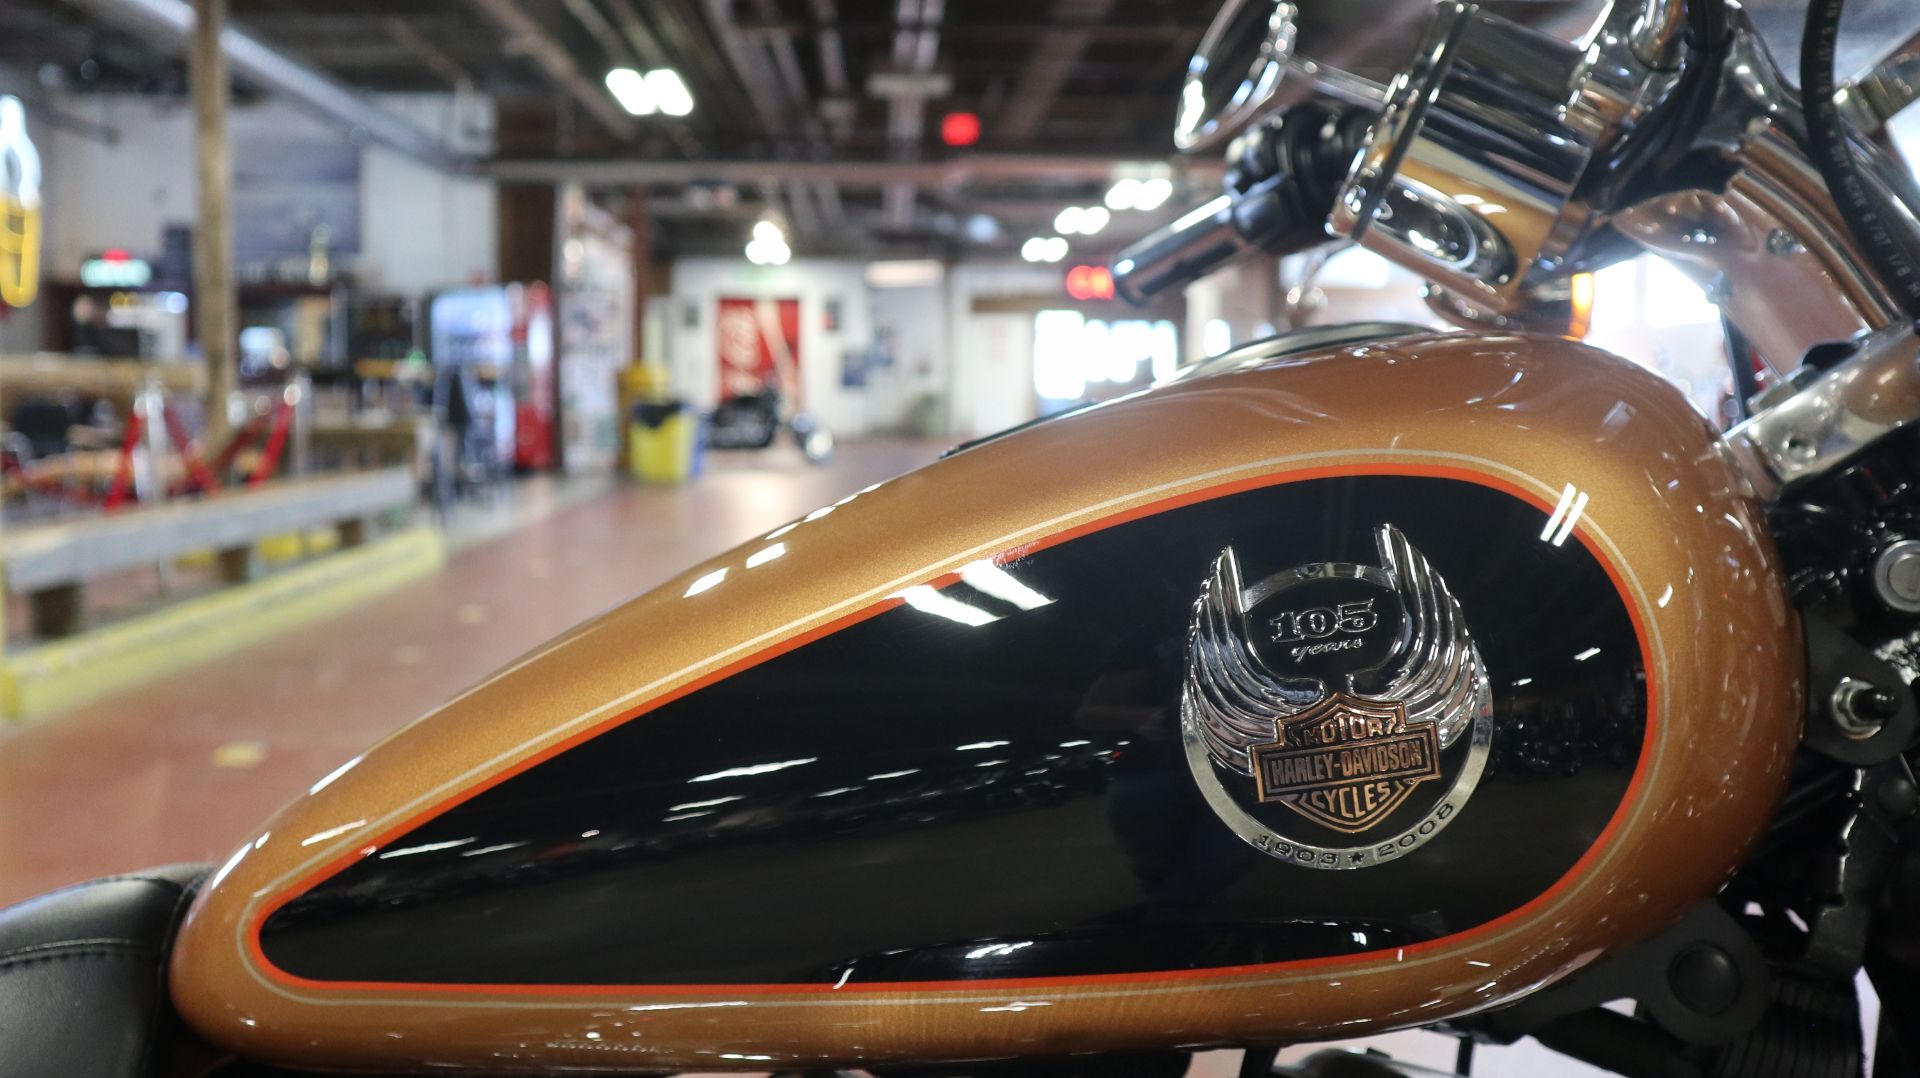 2008 Harley-Davidson Sportster® 1200 Custom in New London, Connecticut - Photo 9